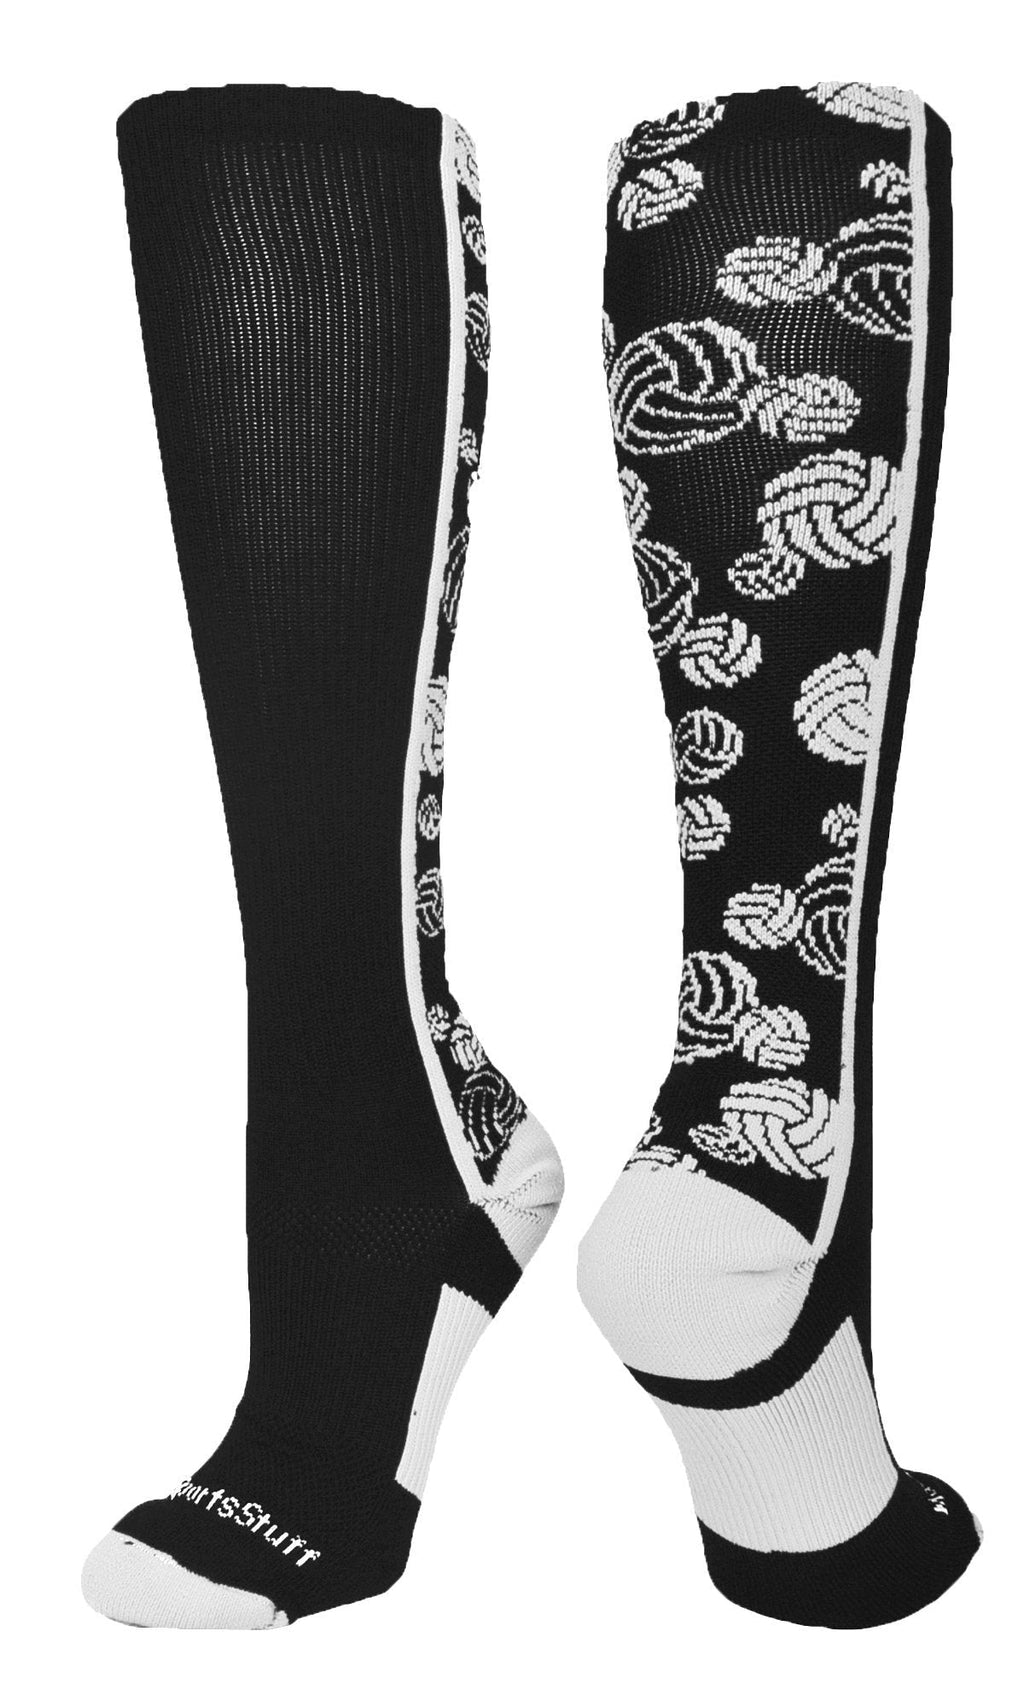 [AUSTRALIA] - MadSportsStuff Crazy Volleyball Logo Over The Calf Socks (Multiple Colors) Black/White Medium 